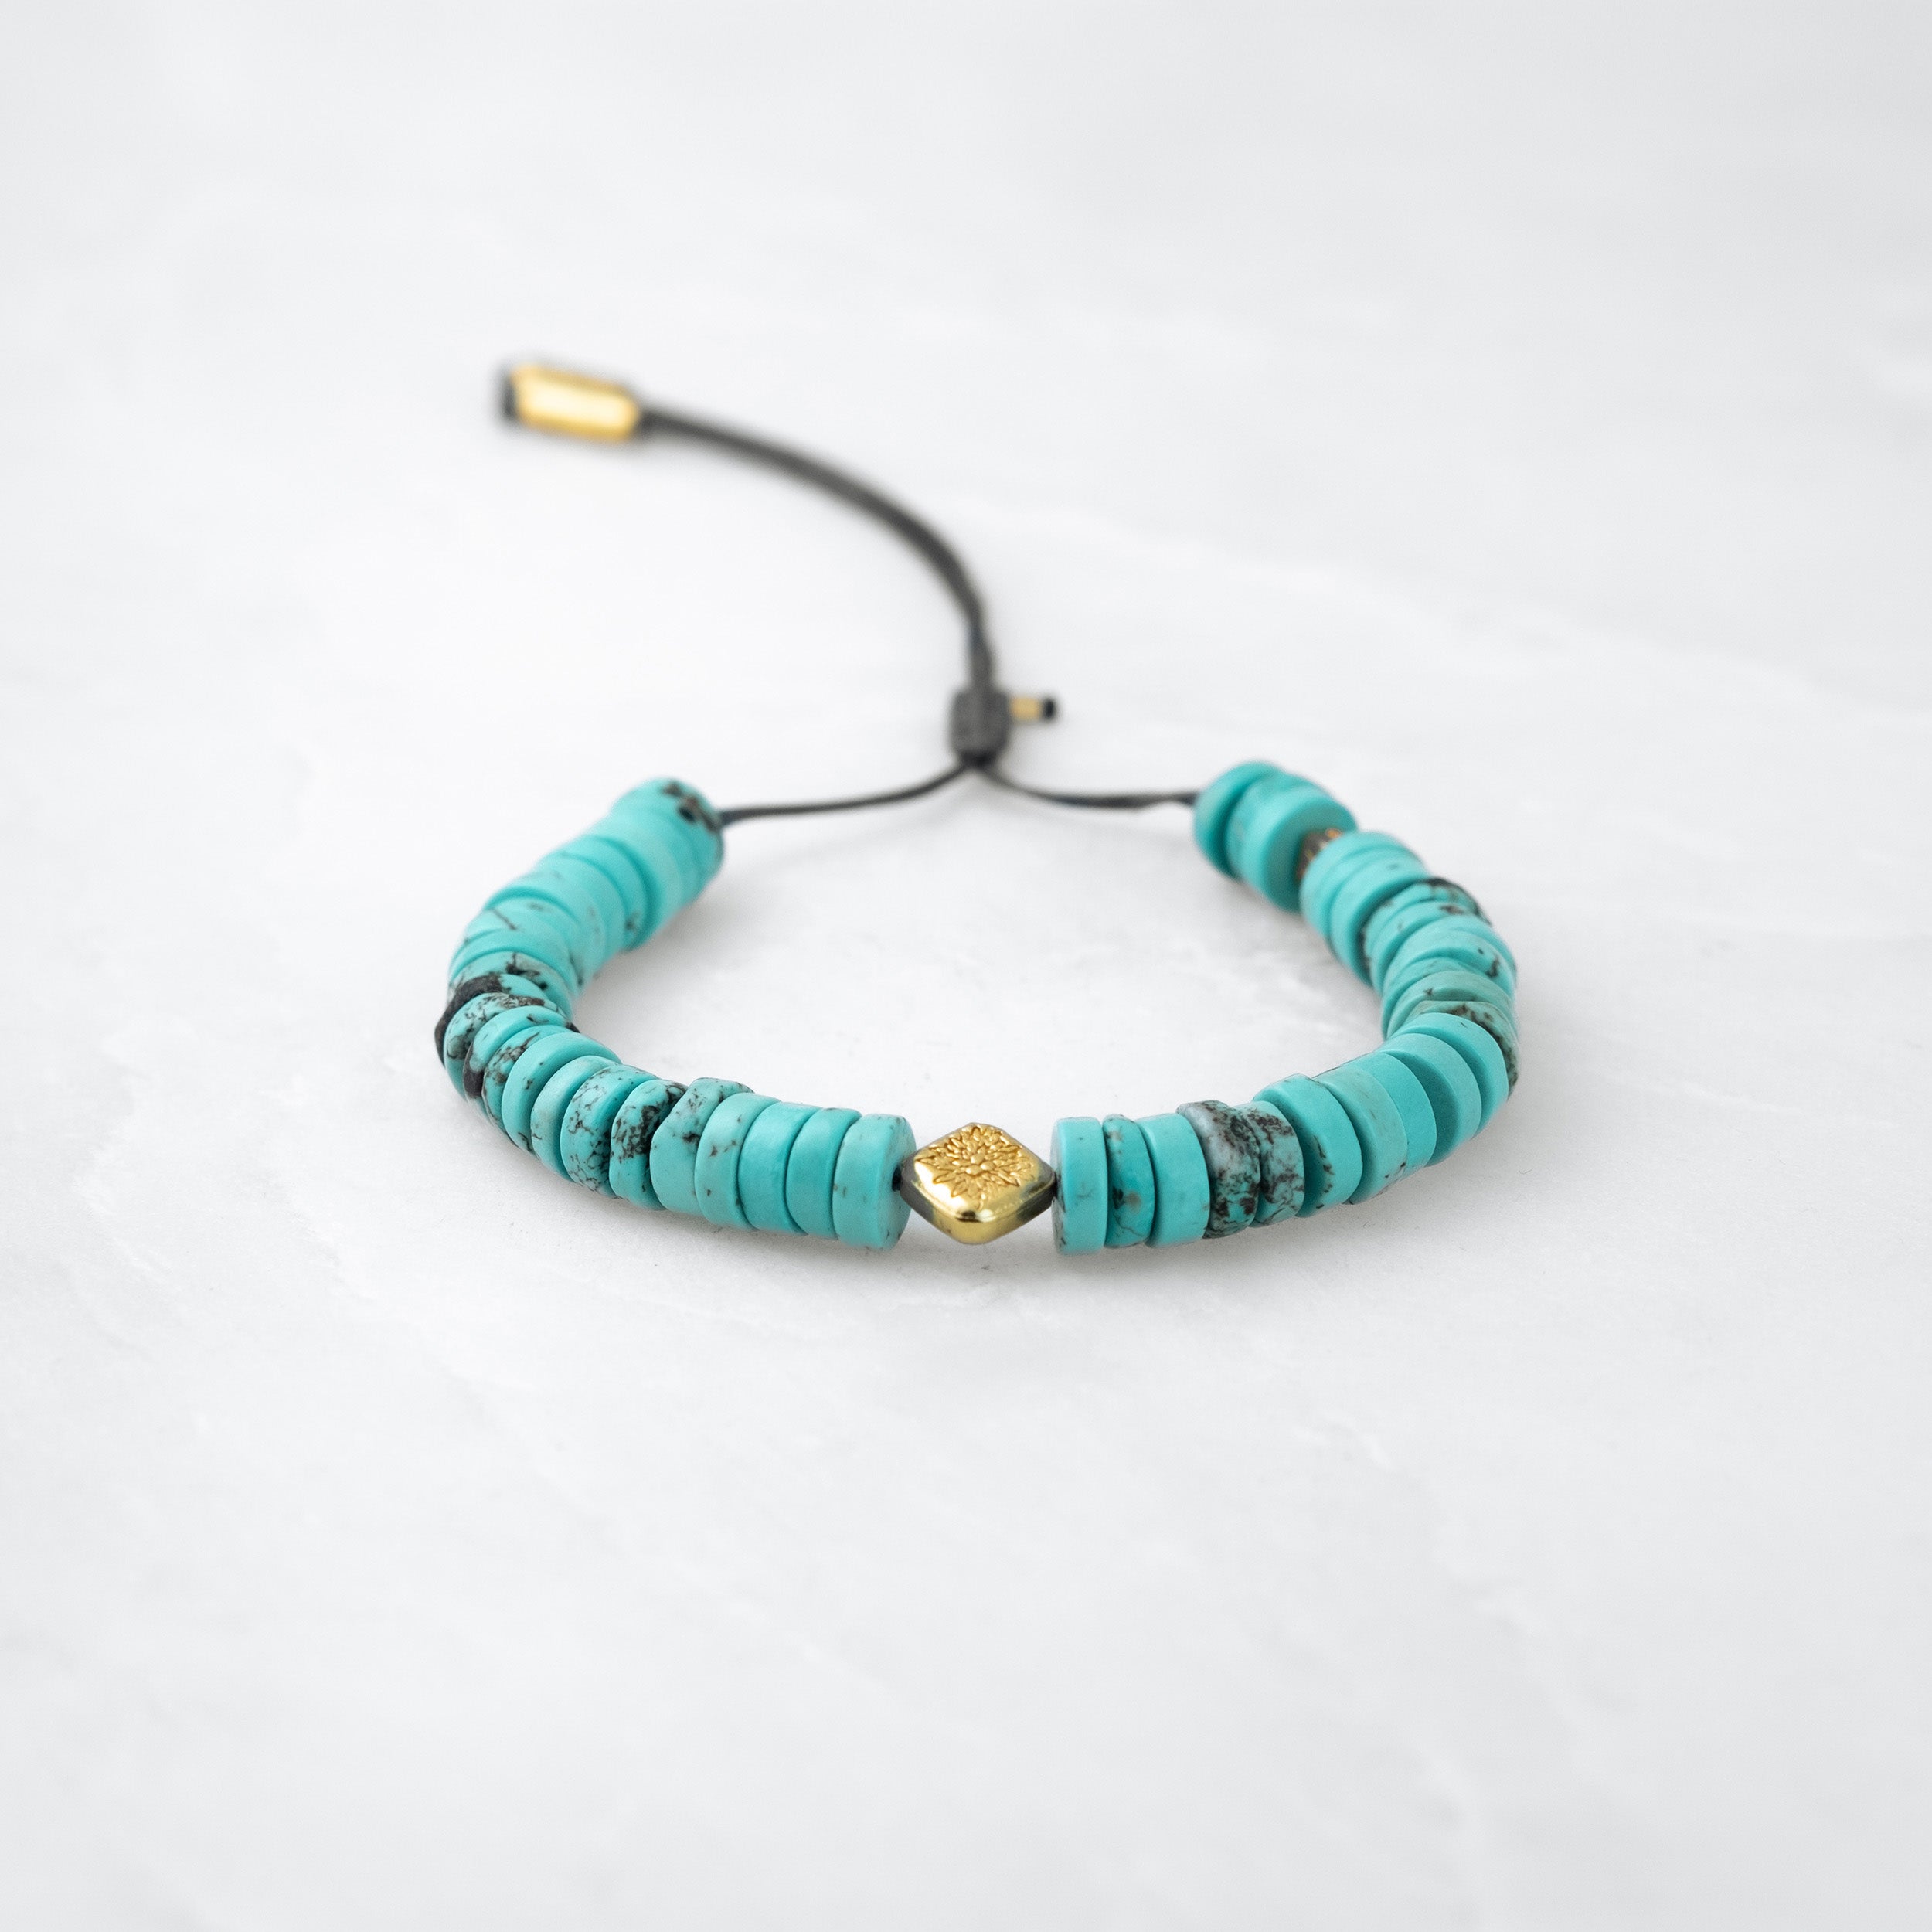 TIBET COLOR bracelet - Large turquoise, golden Amala